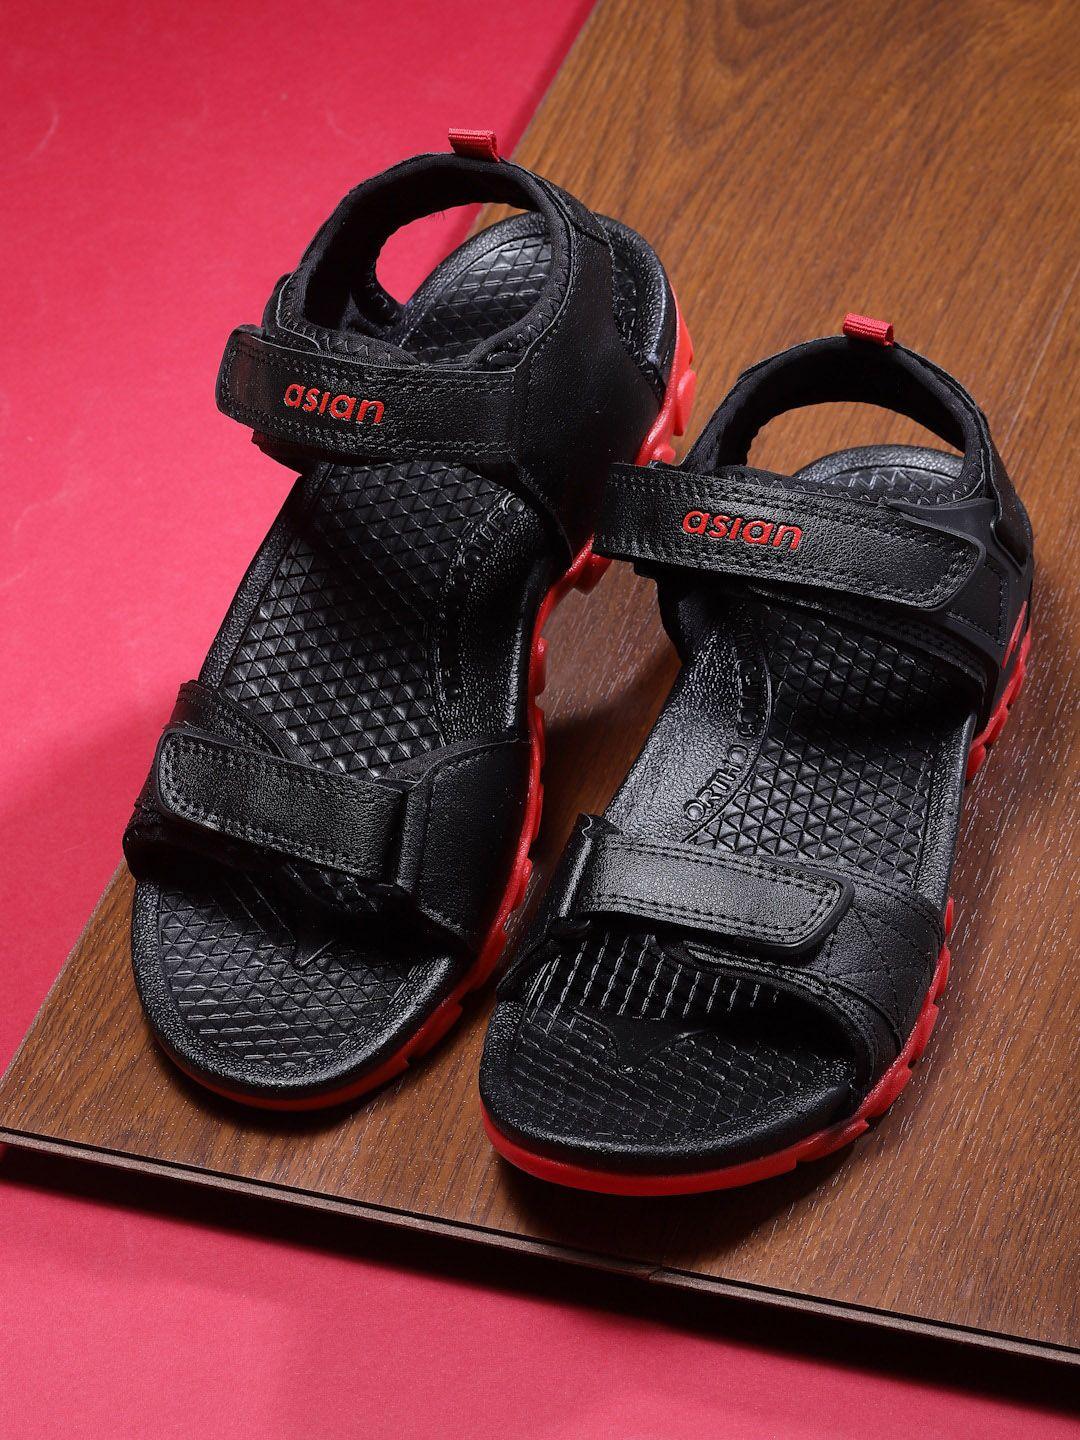 asian-men-vintage-01-sports-sandals